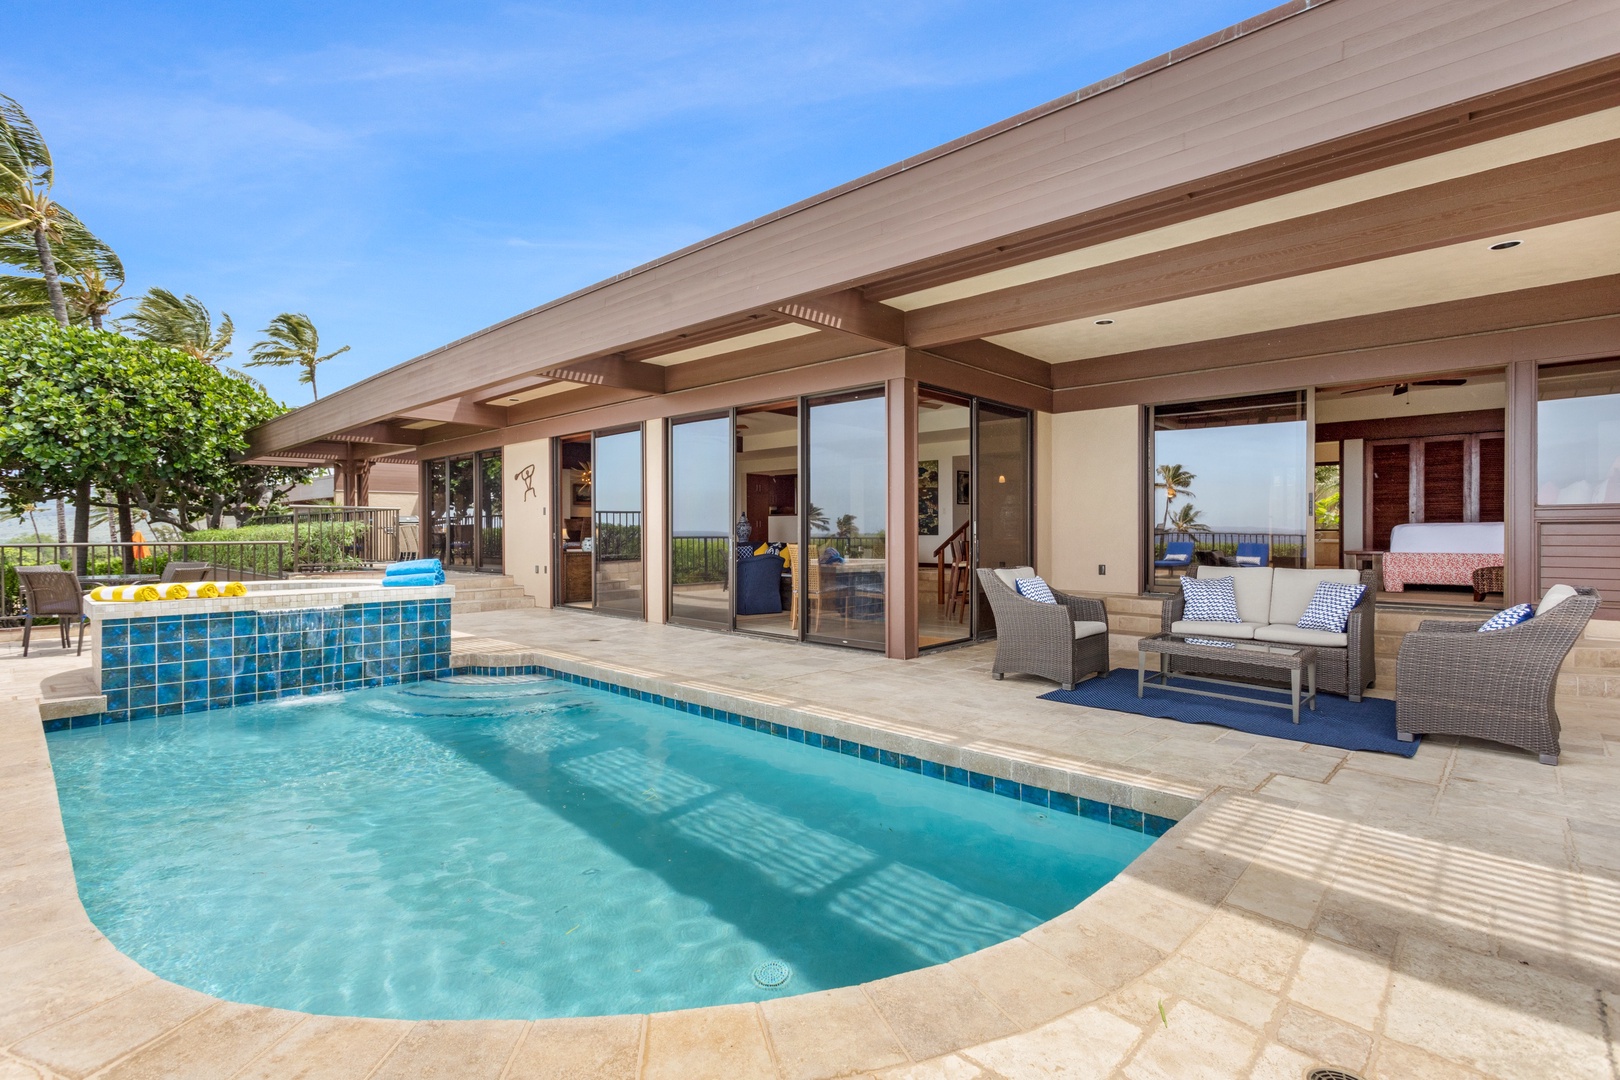 Kamuela Vacation Rentals, 3BD Villas (39) at Mauna Kea Resort - View from pool deck back toward the home.